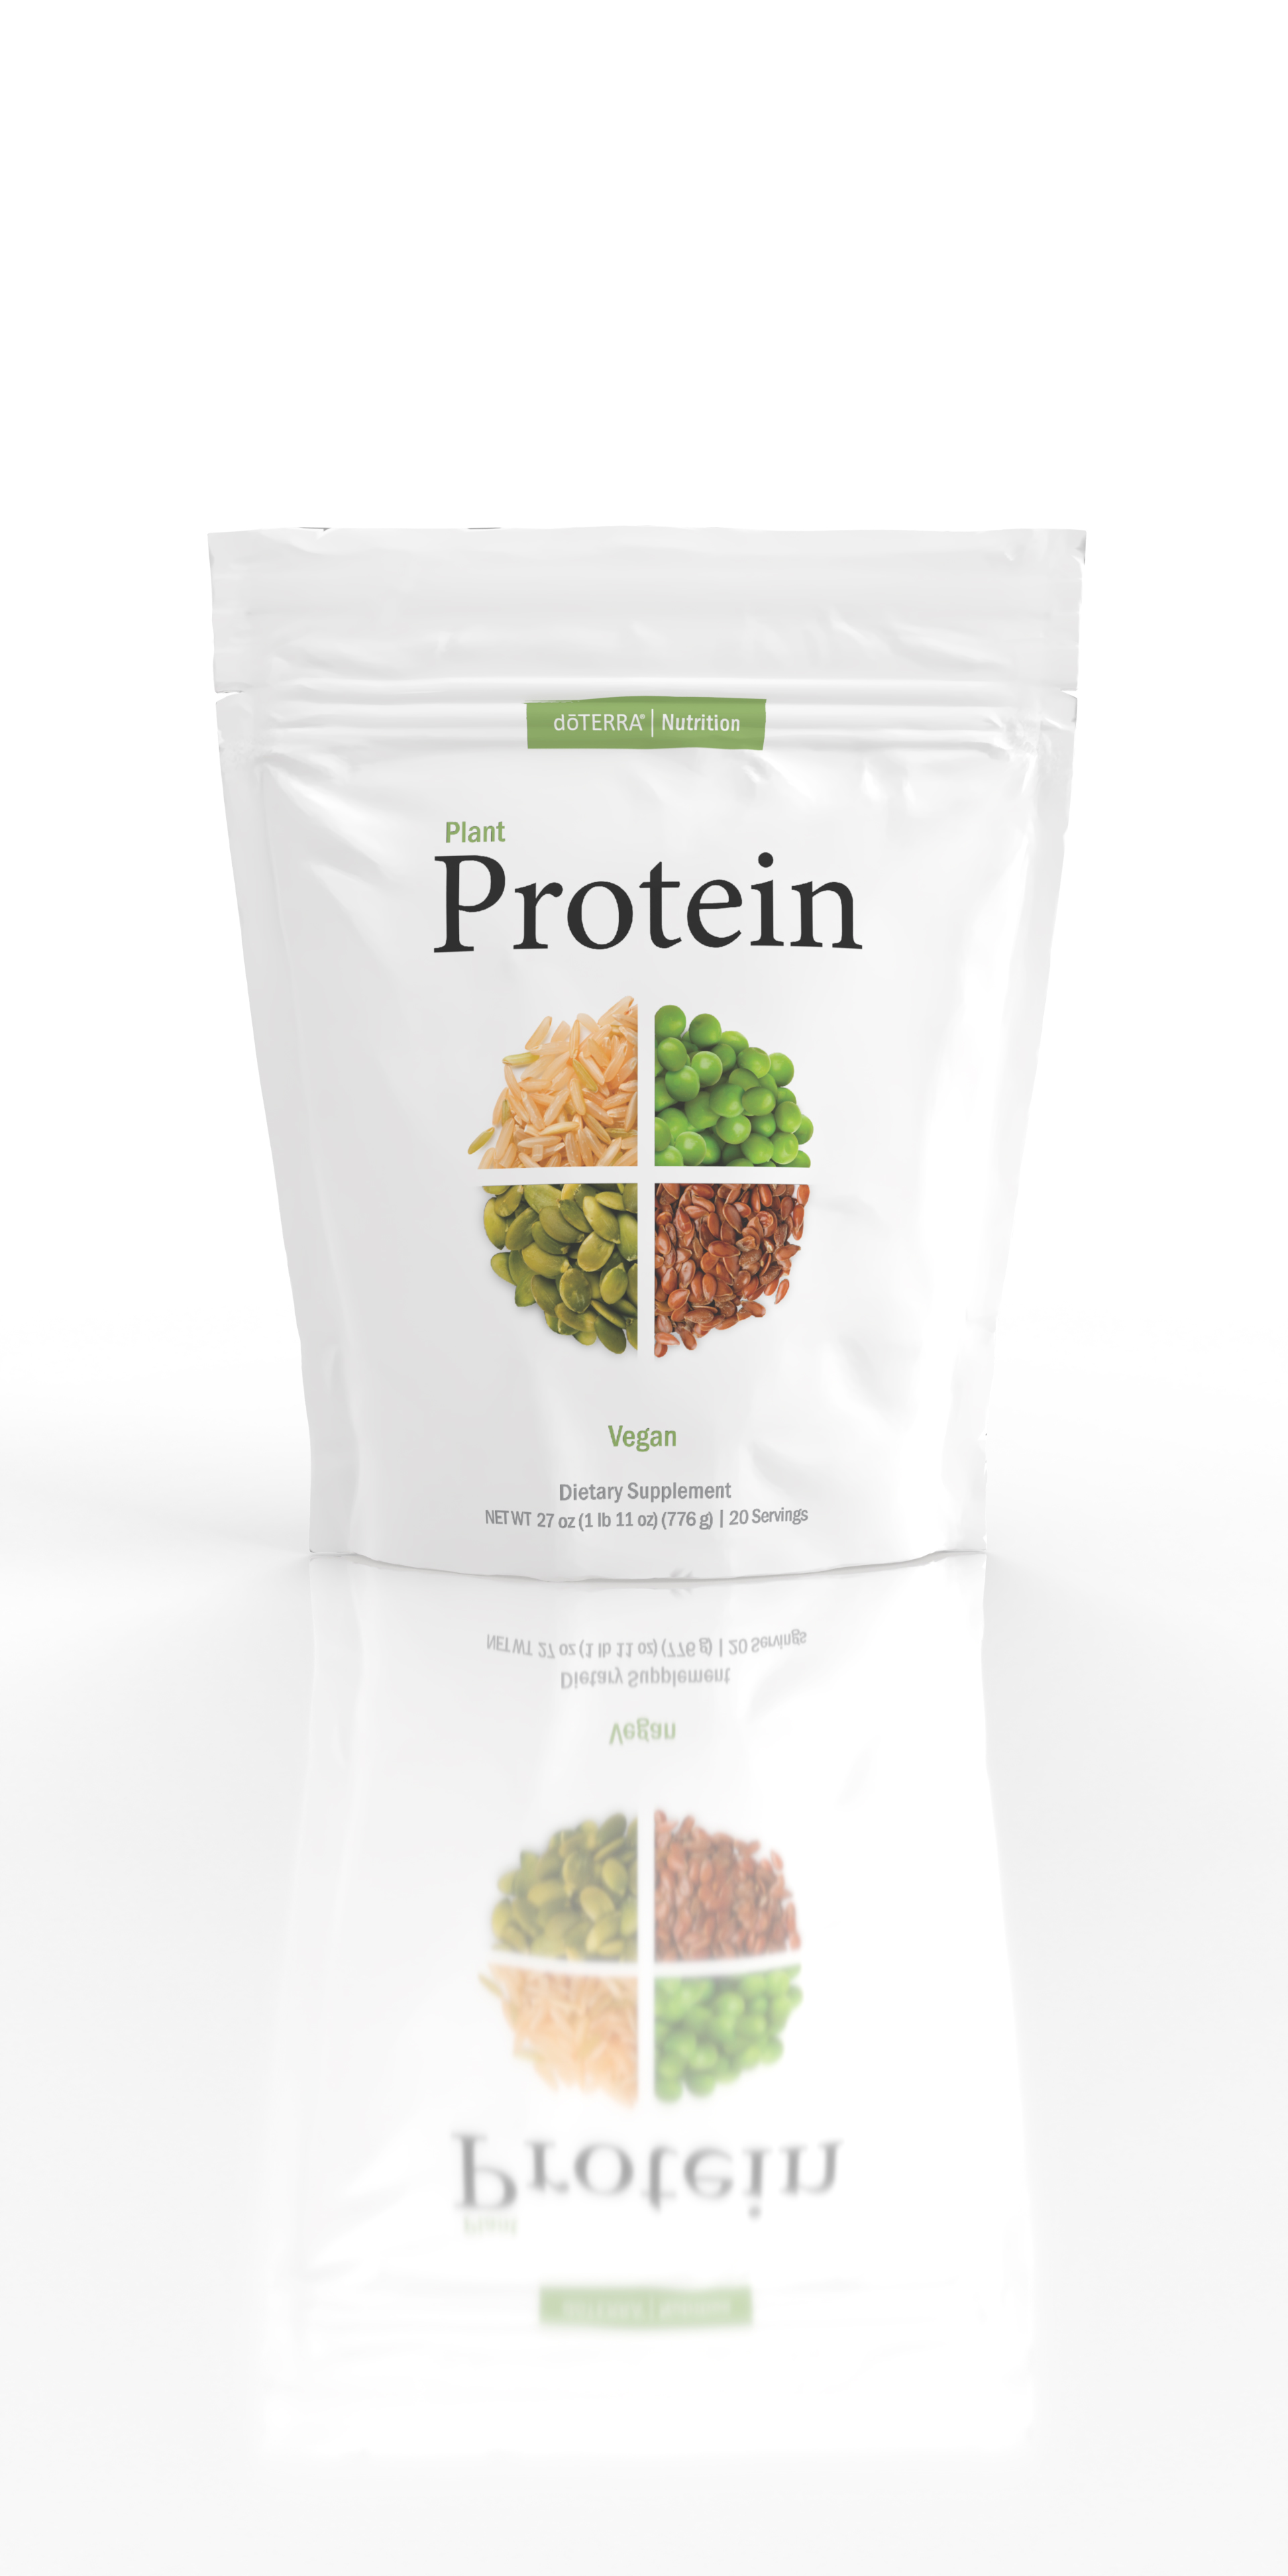 https://media.doterra.com/us/en/images/product/plant-protein-vegan.jpg